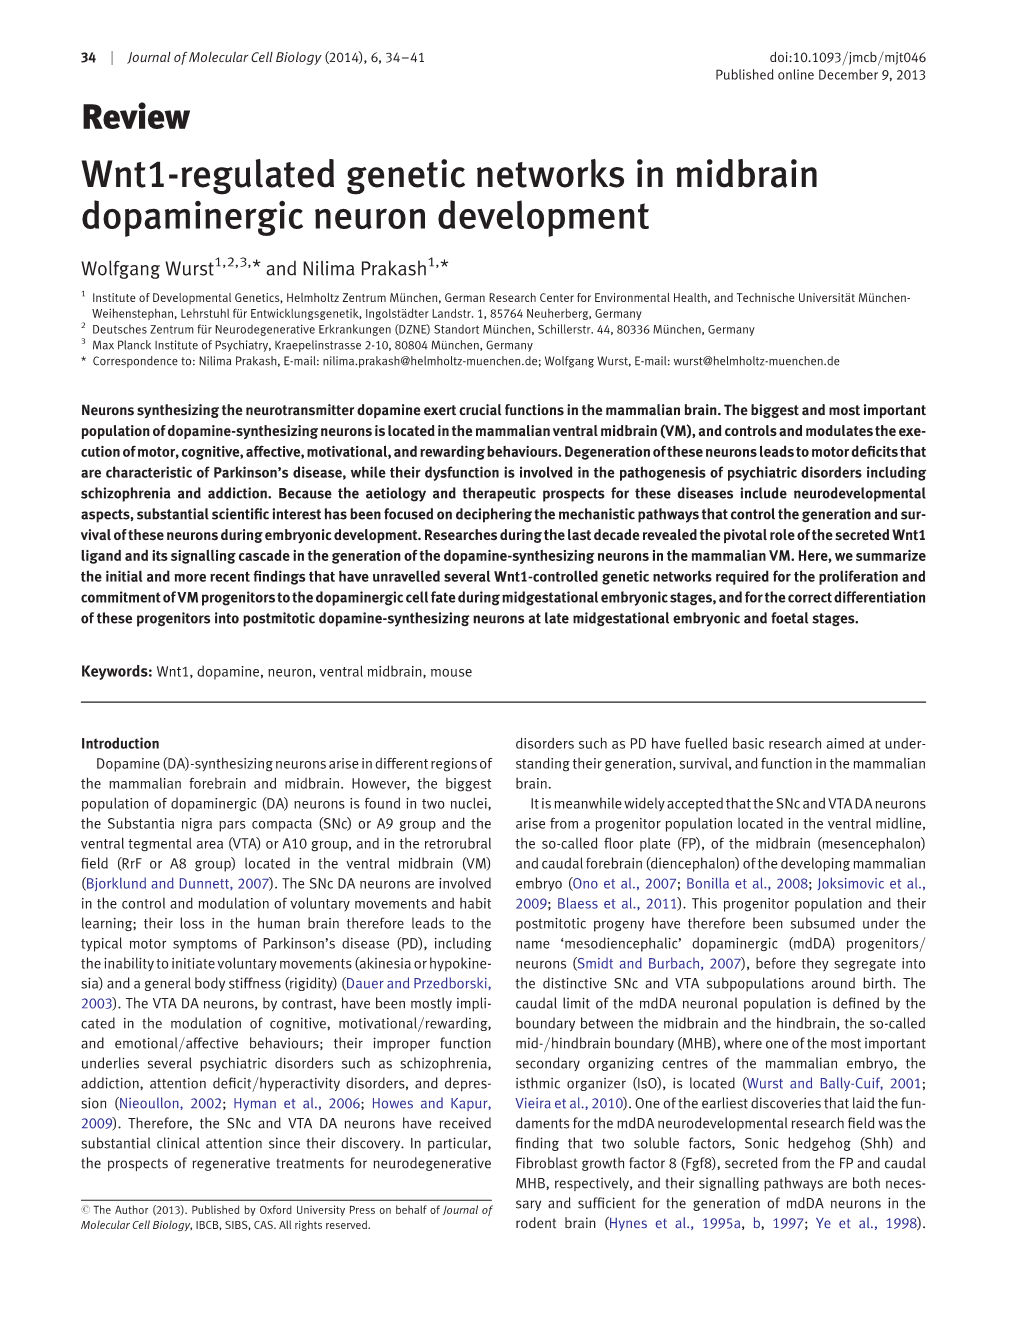 Wnt1-Regulated Genetic Networks in Midbrain Dopaminergic Neuron Development